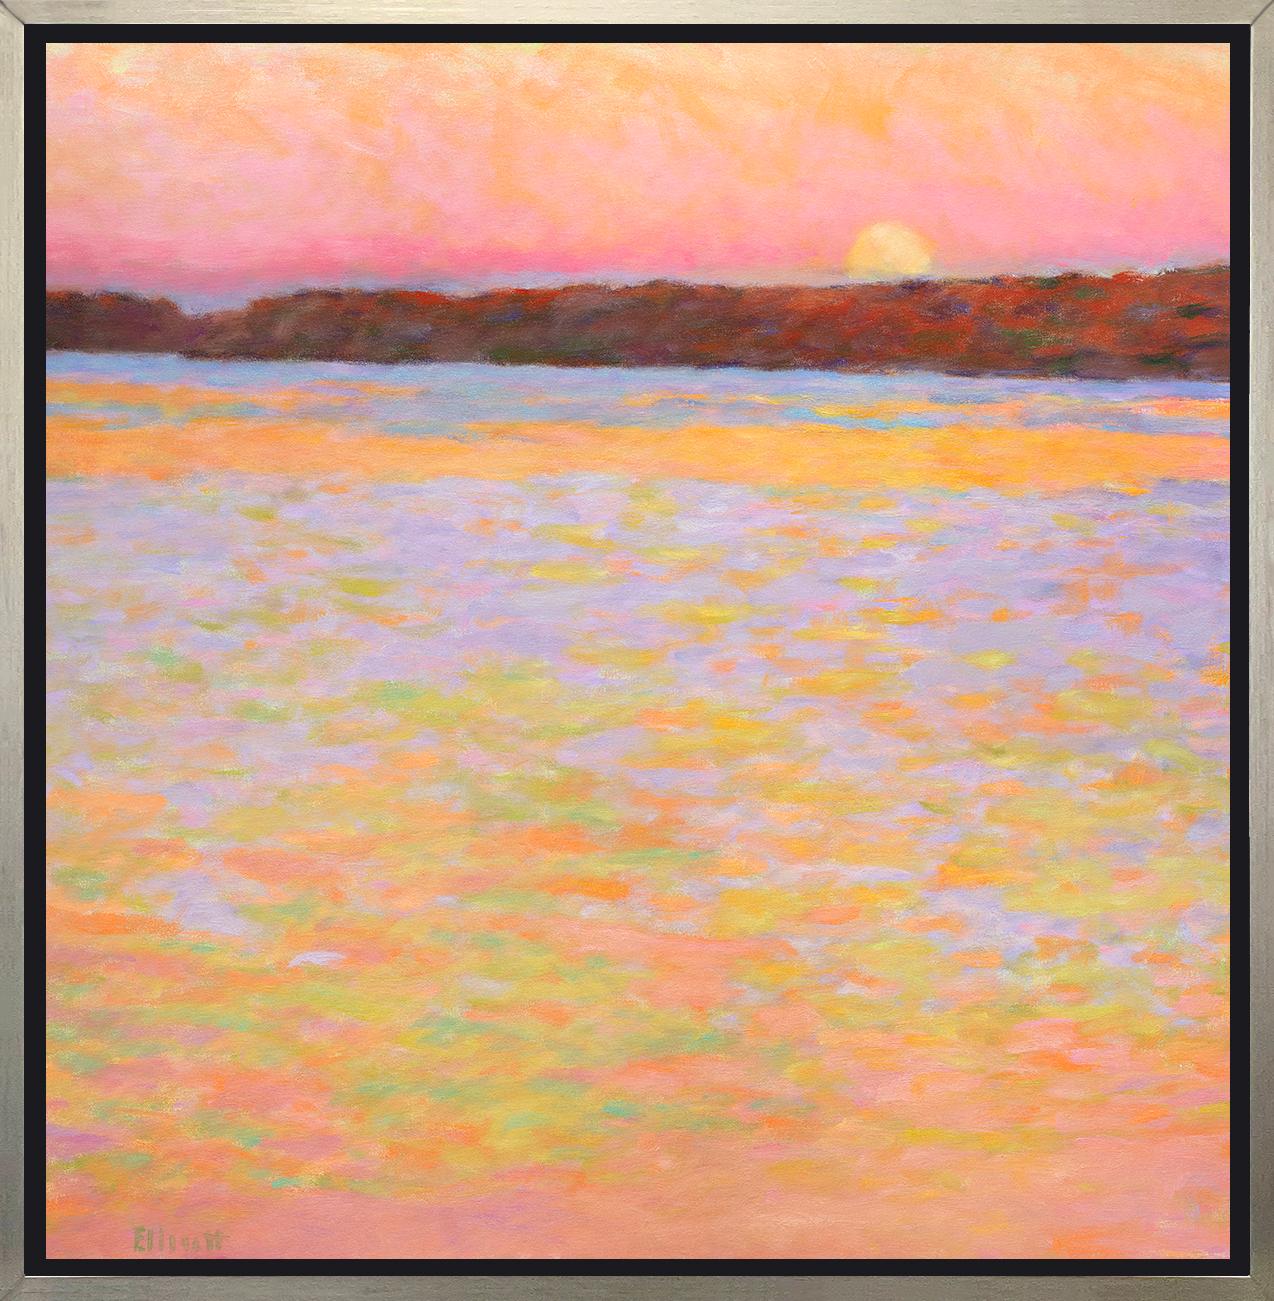 Ken Elliott Landscape Print - "Tangerine Evening II, " Framed Limited Edition Giclee Print, 30" x 30"